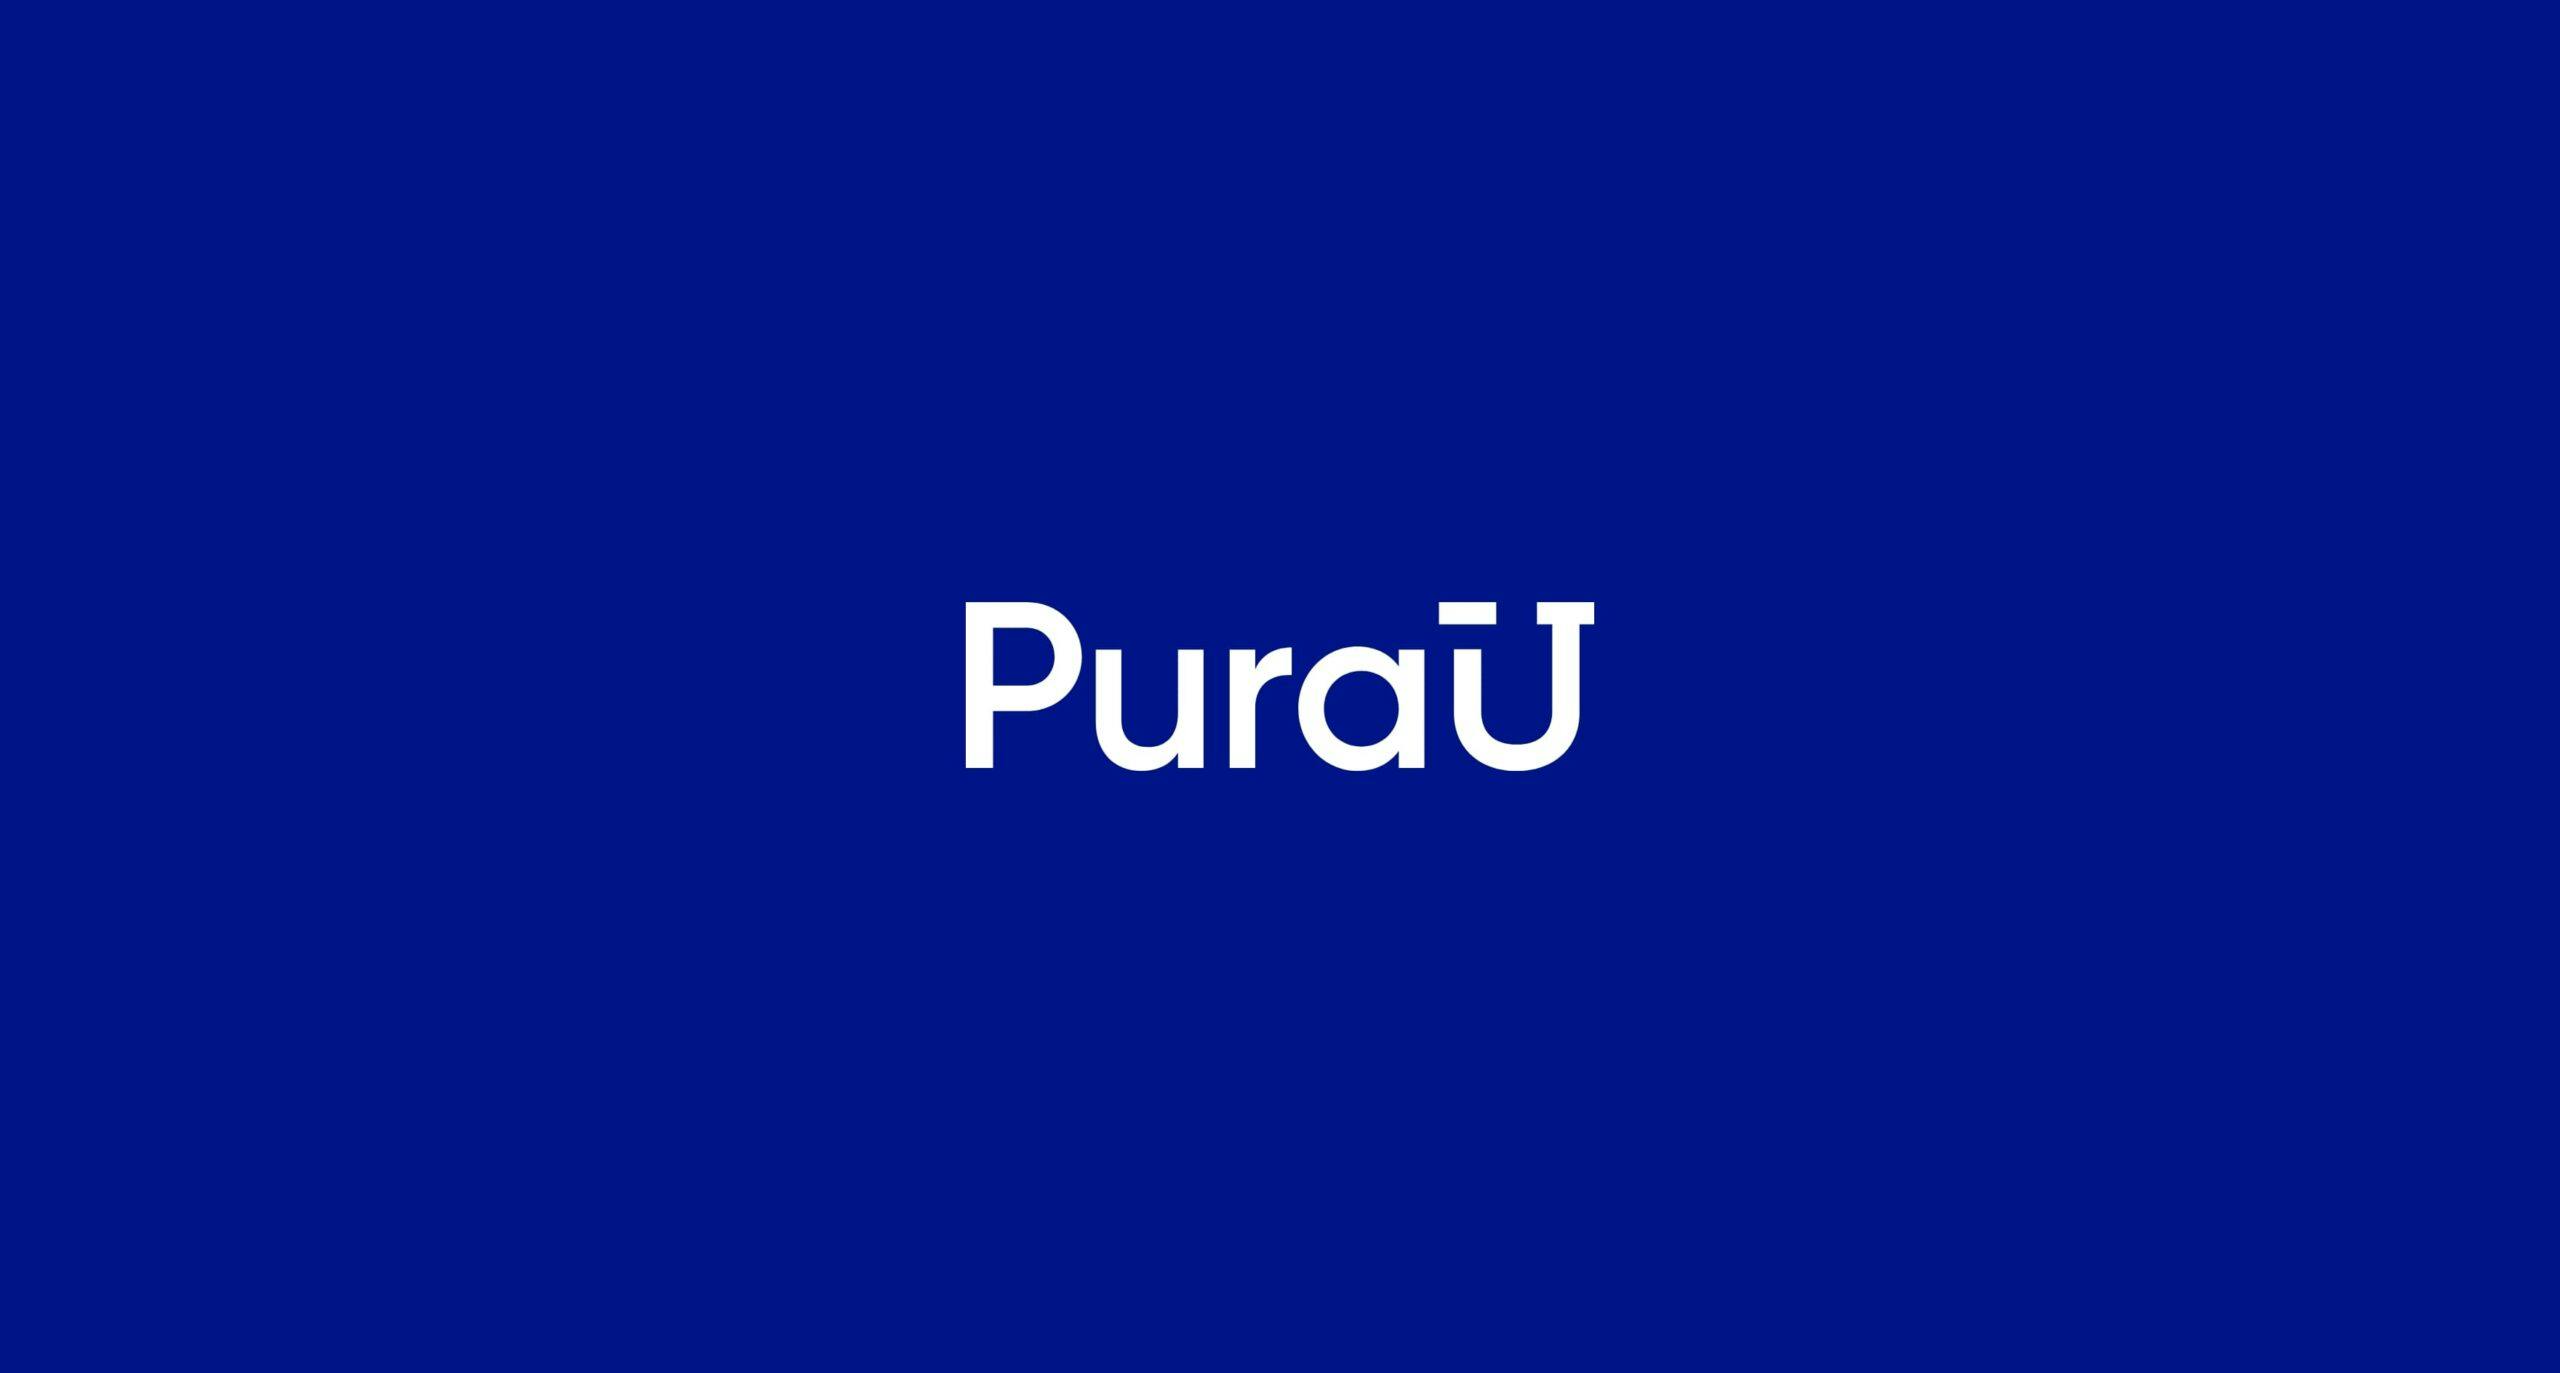 PuraU logo by Embark Agency